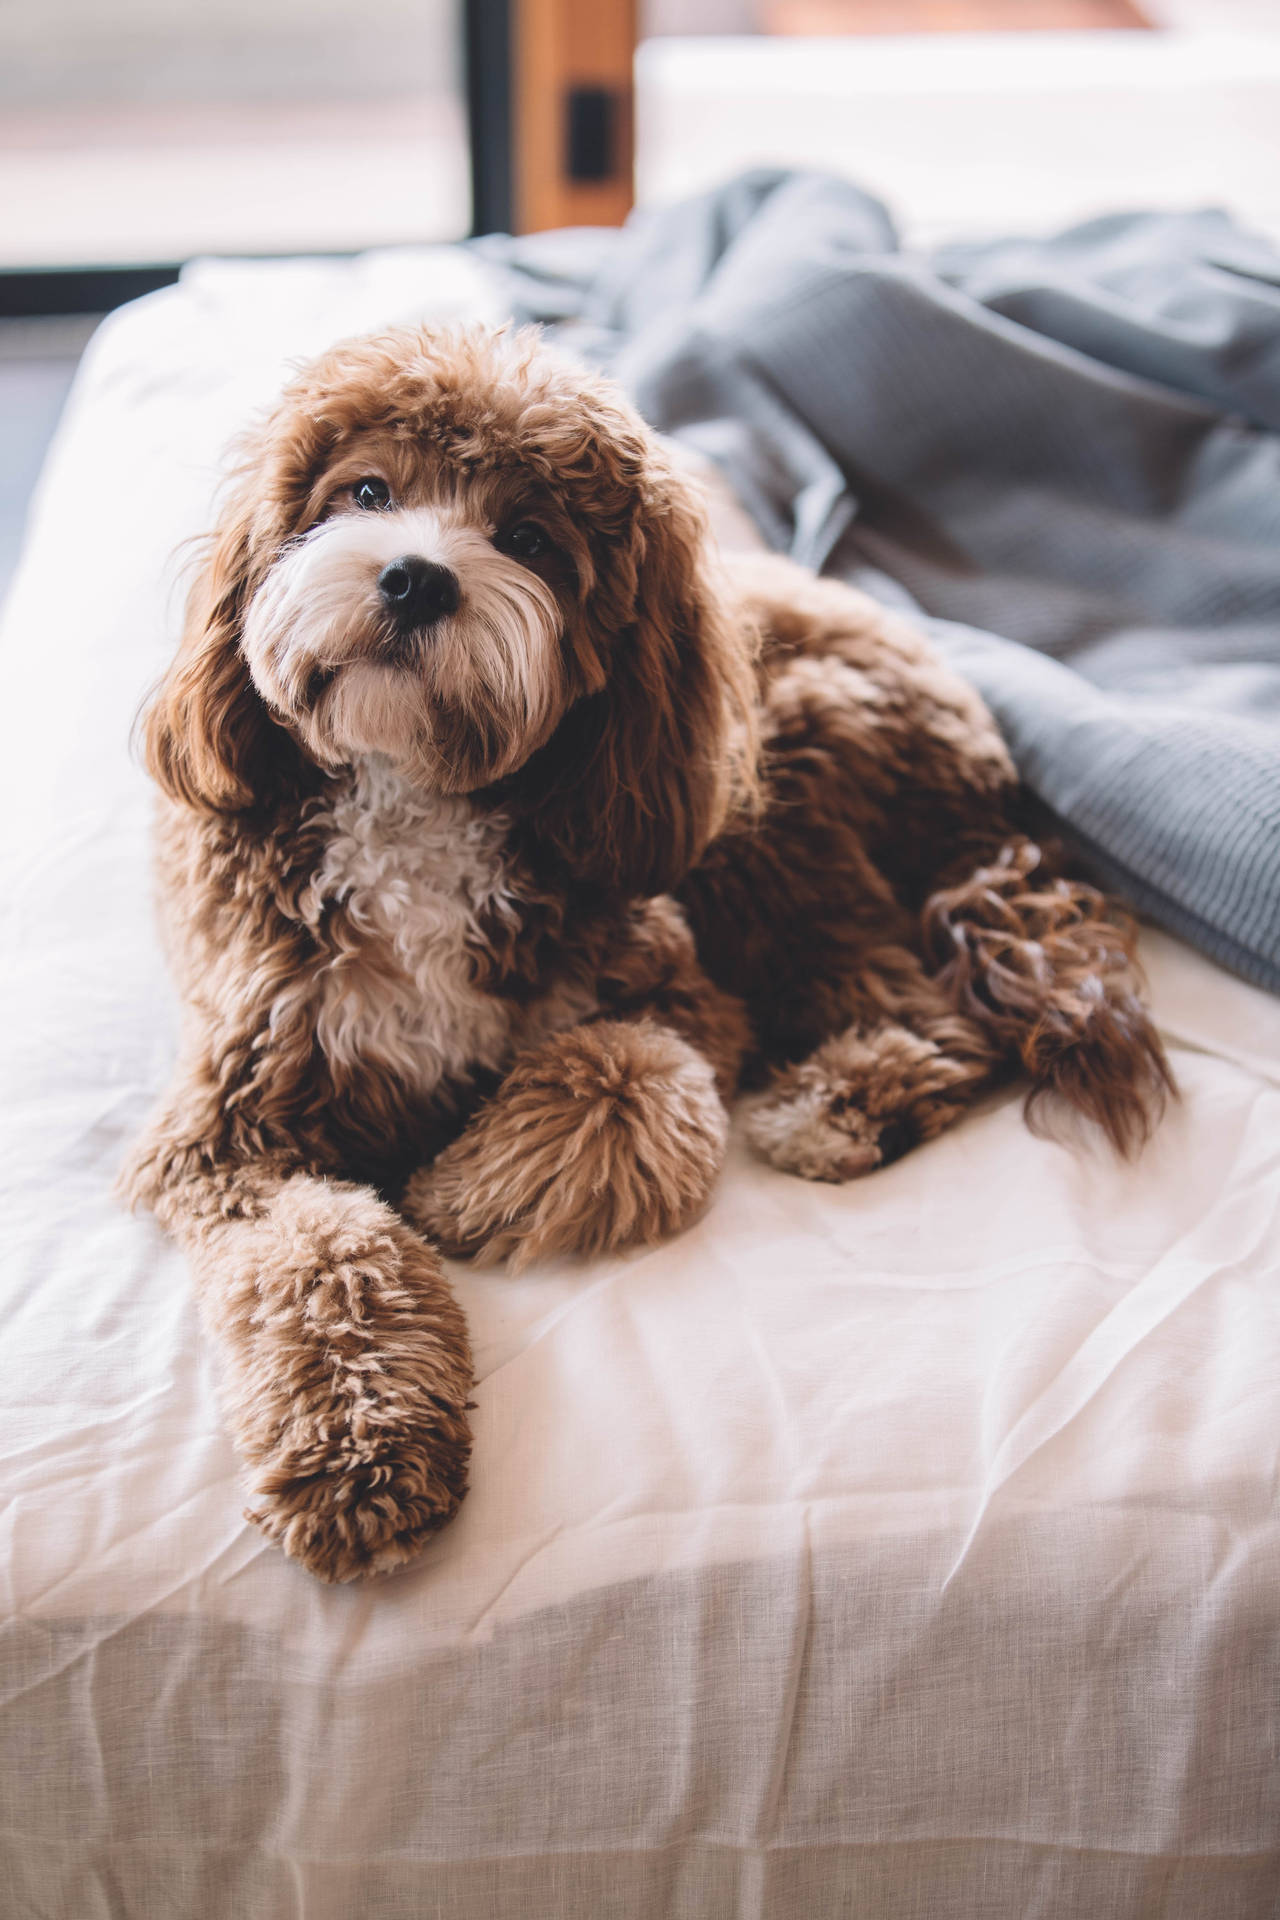 Cavapoo Dog On Bed